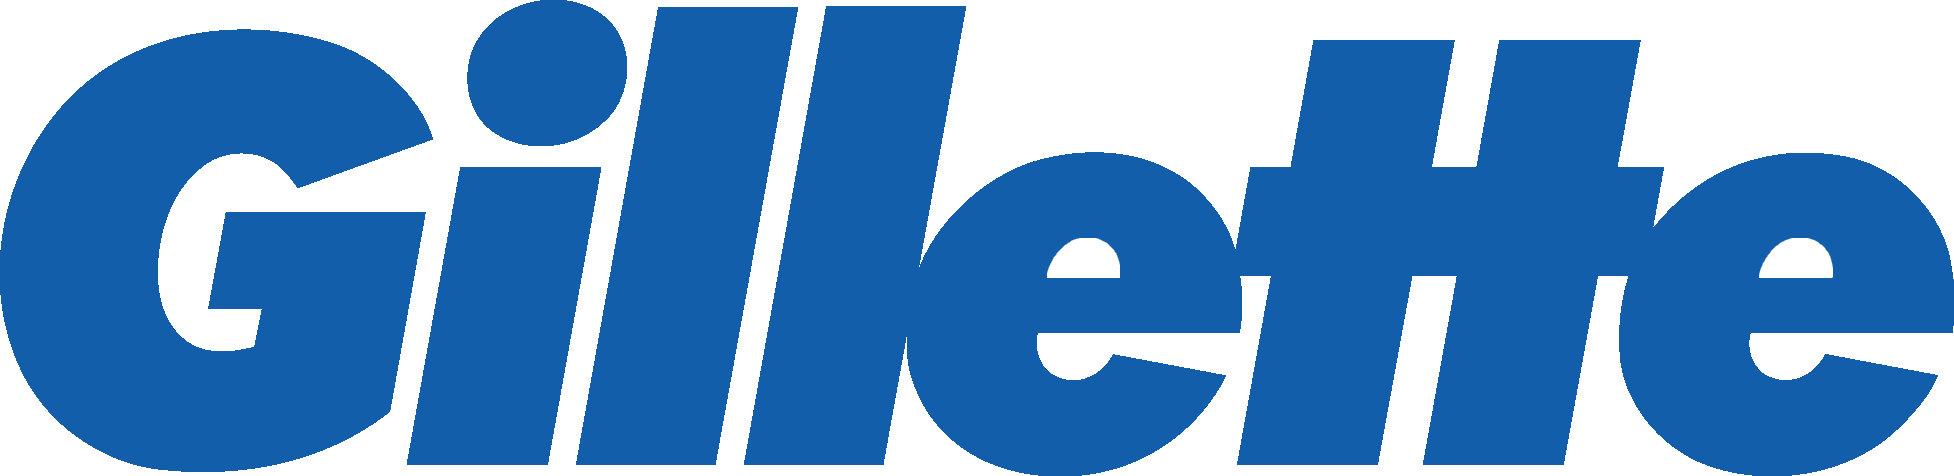 Gillette Logo   Pluspng - Gillette, Transparent background PNG HD thumbnail